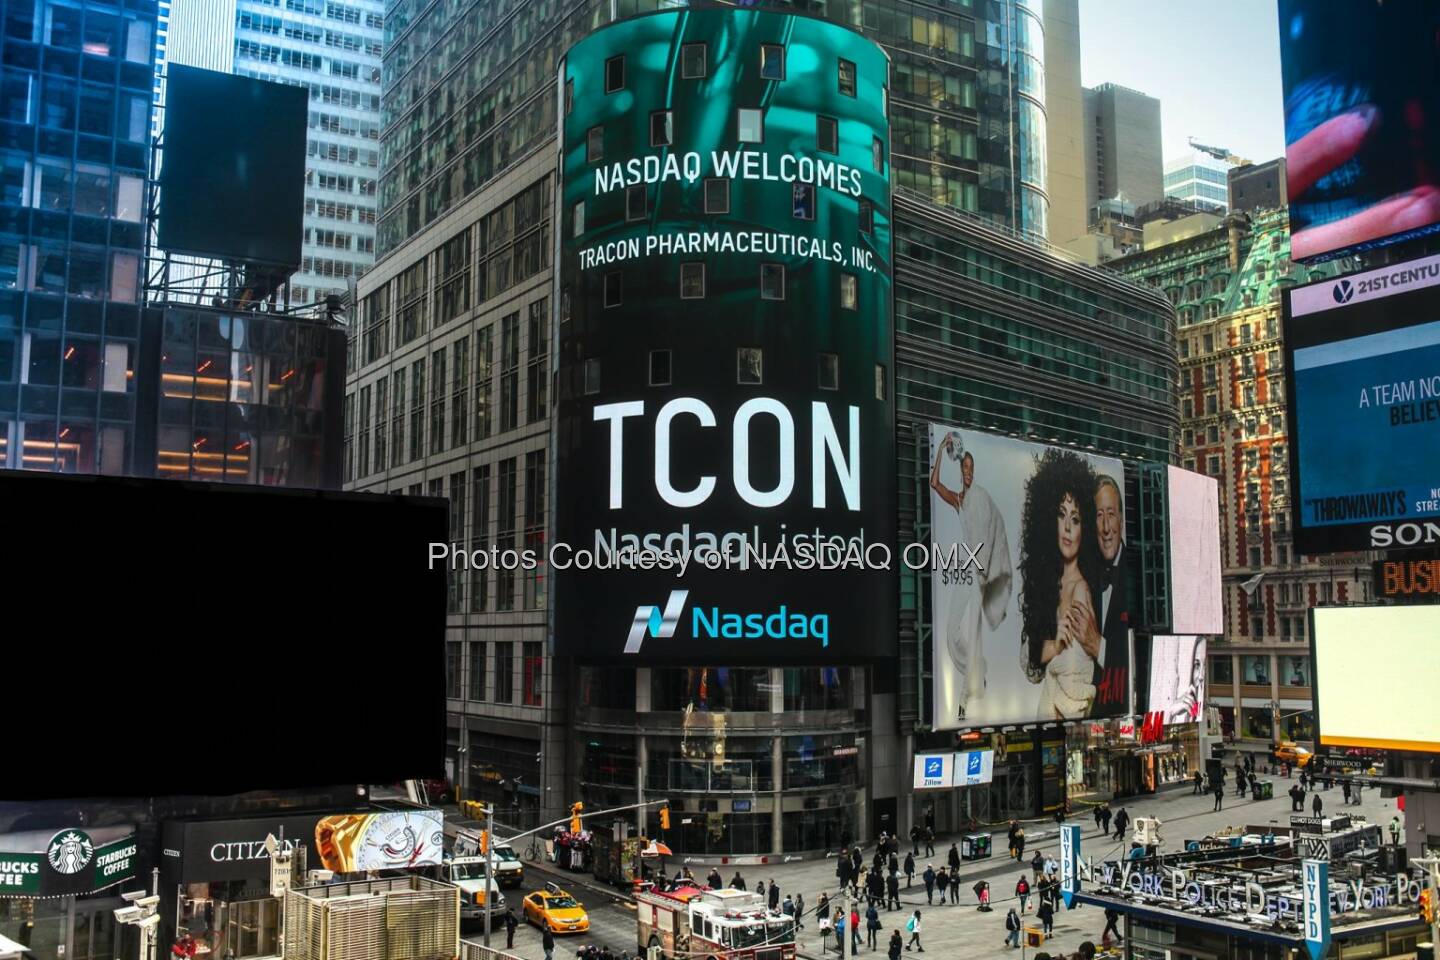 Nasdaq proudly welcomes Tracon Pharmaceuticals, Inc to the #Nasdaq Stock Market! $TCON #IgniteYourAmbition  Source: http://facebook.com/NASDAQ